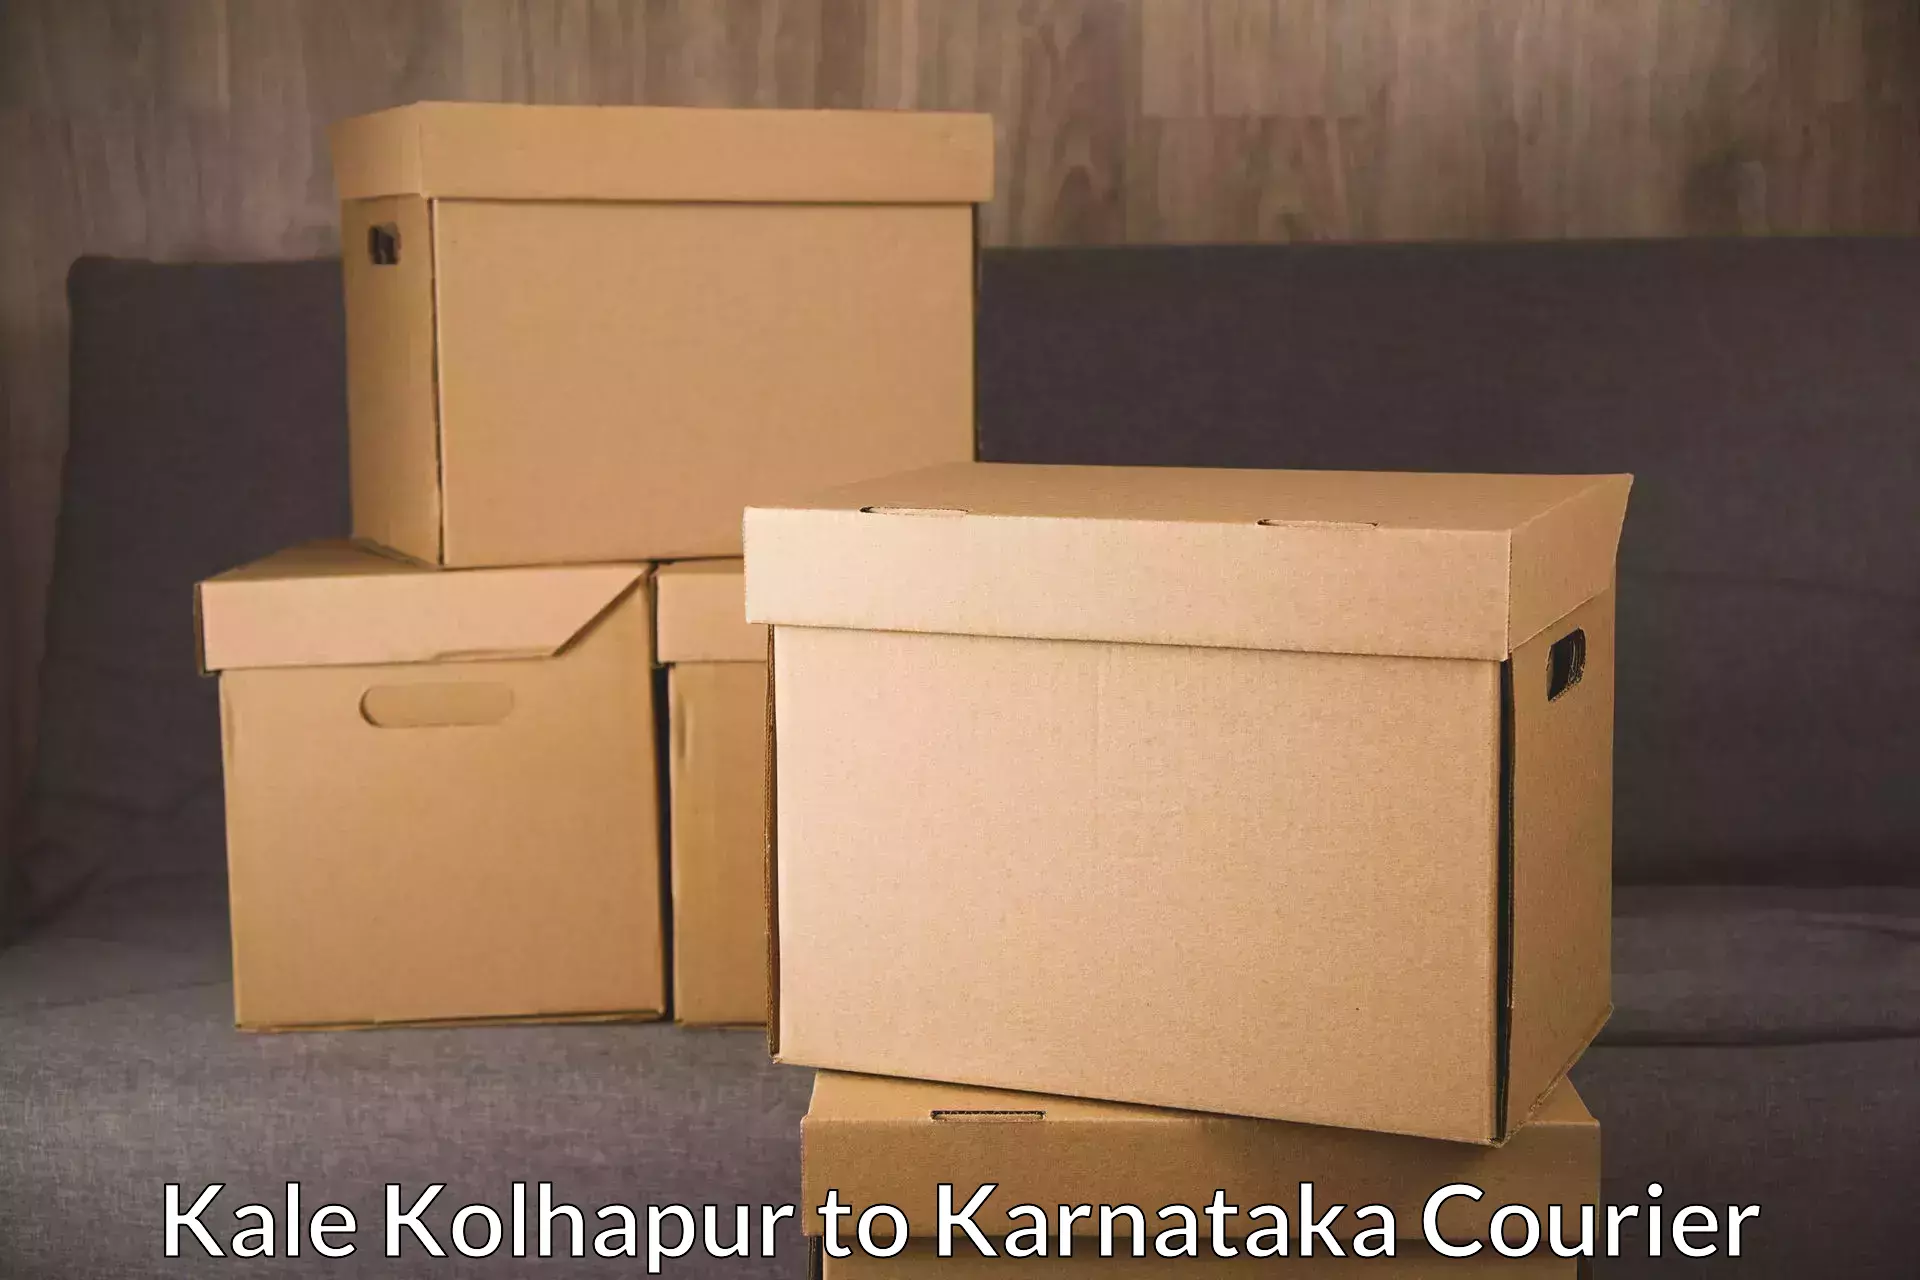 Courier service innovation Kale Kolhapur to Mangalore Port